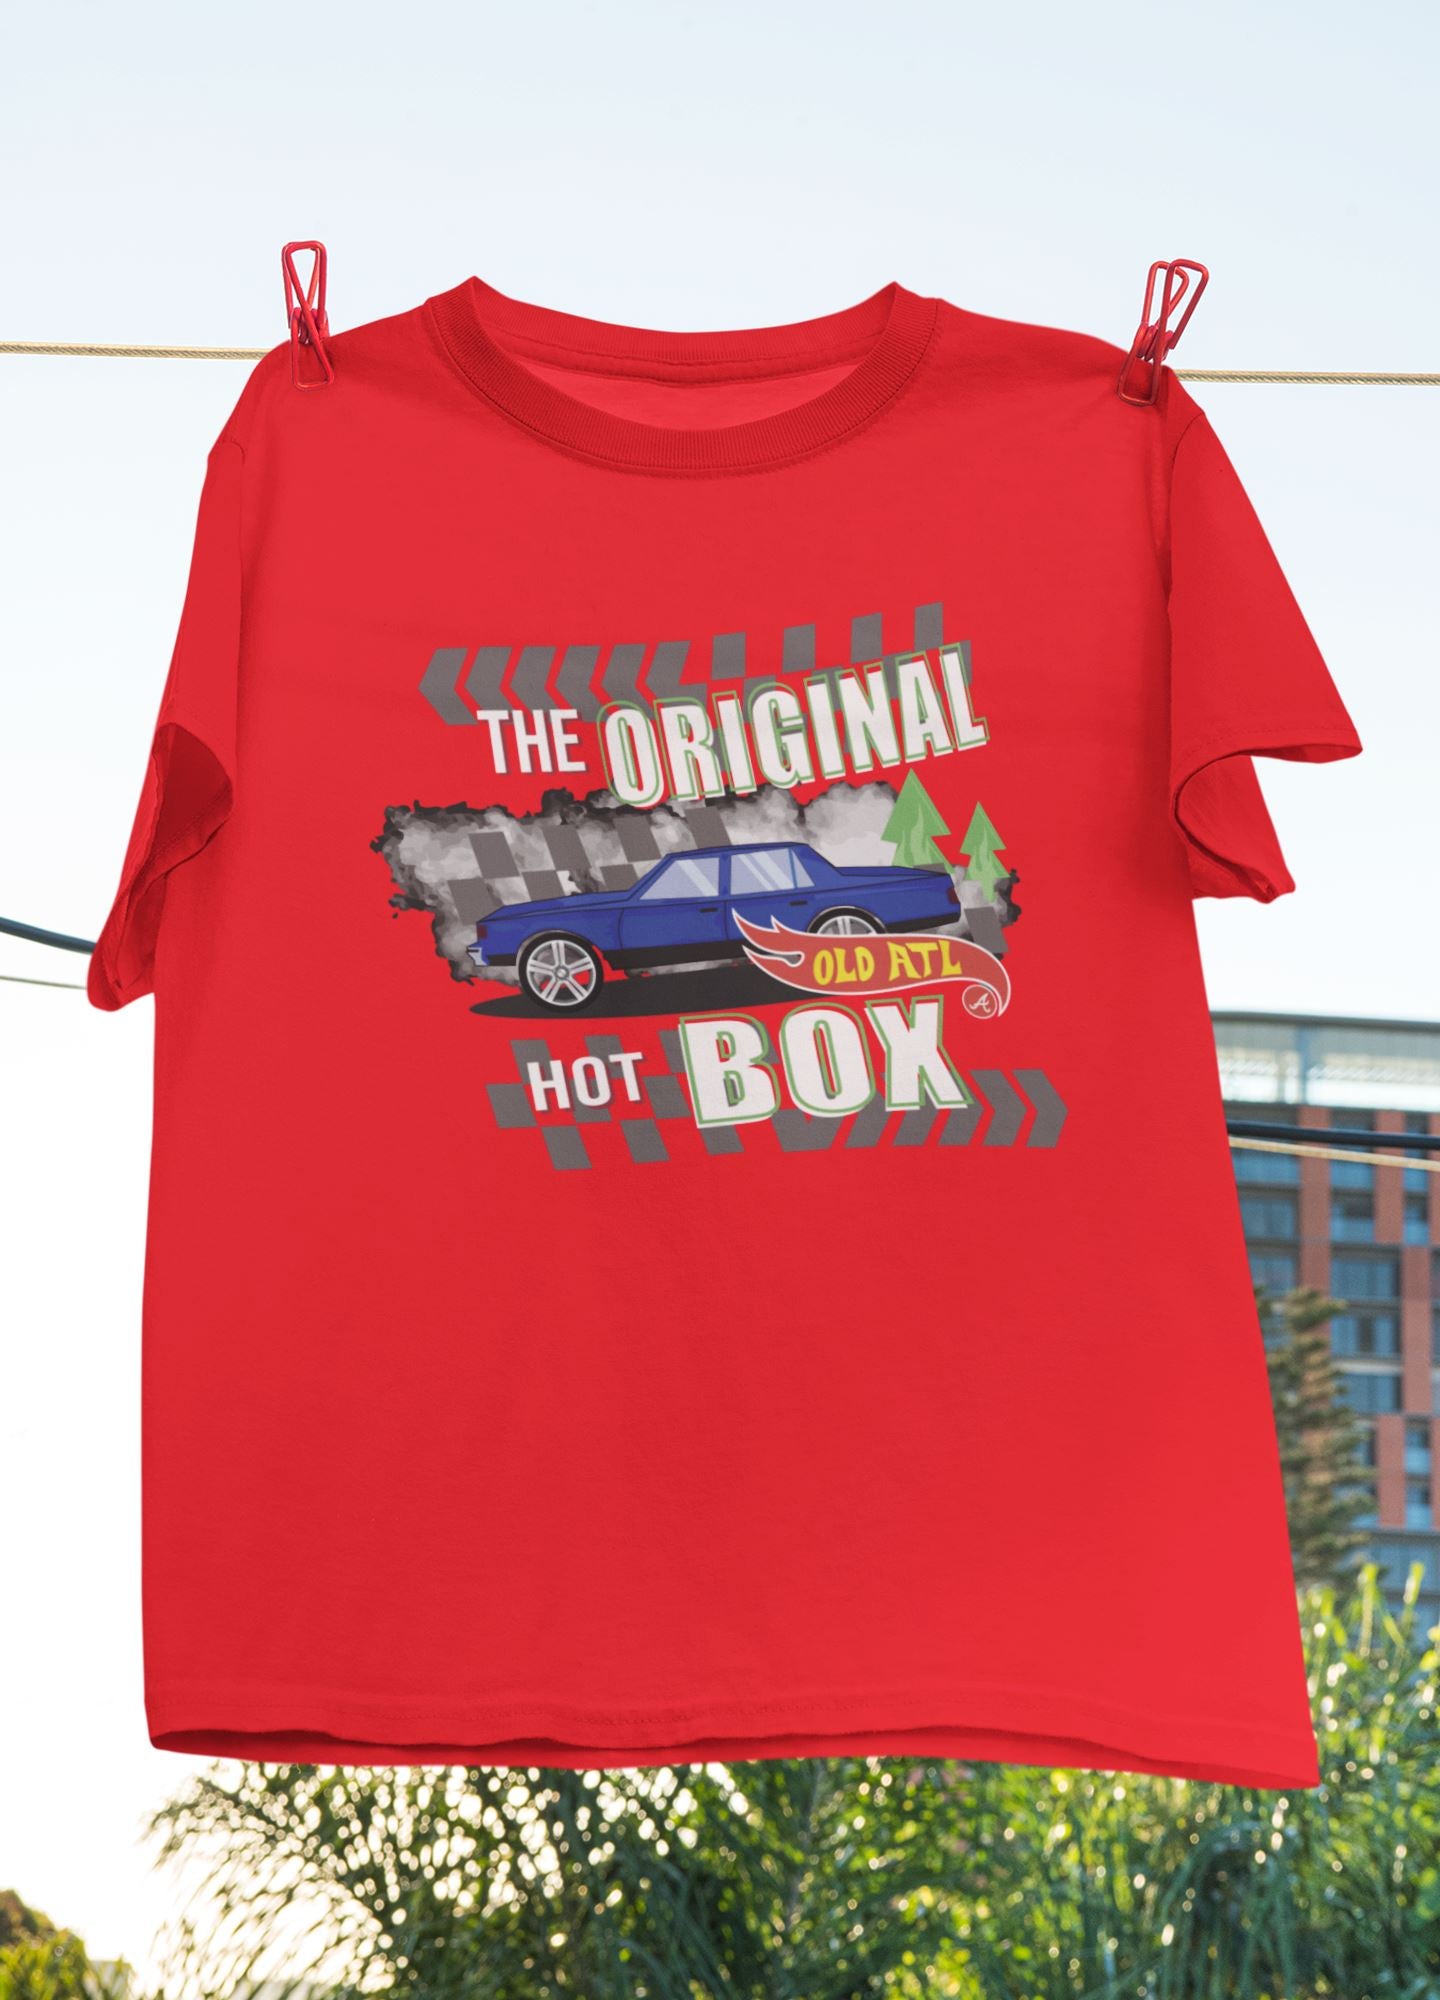 Old ATL - Original Hot Box T-Shirt B1ack By Design LLC 